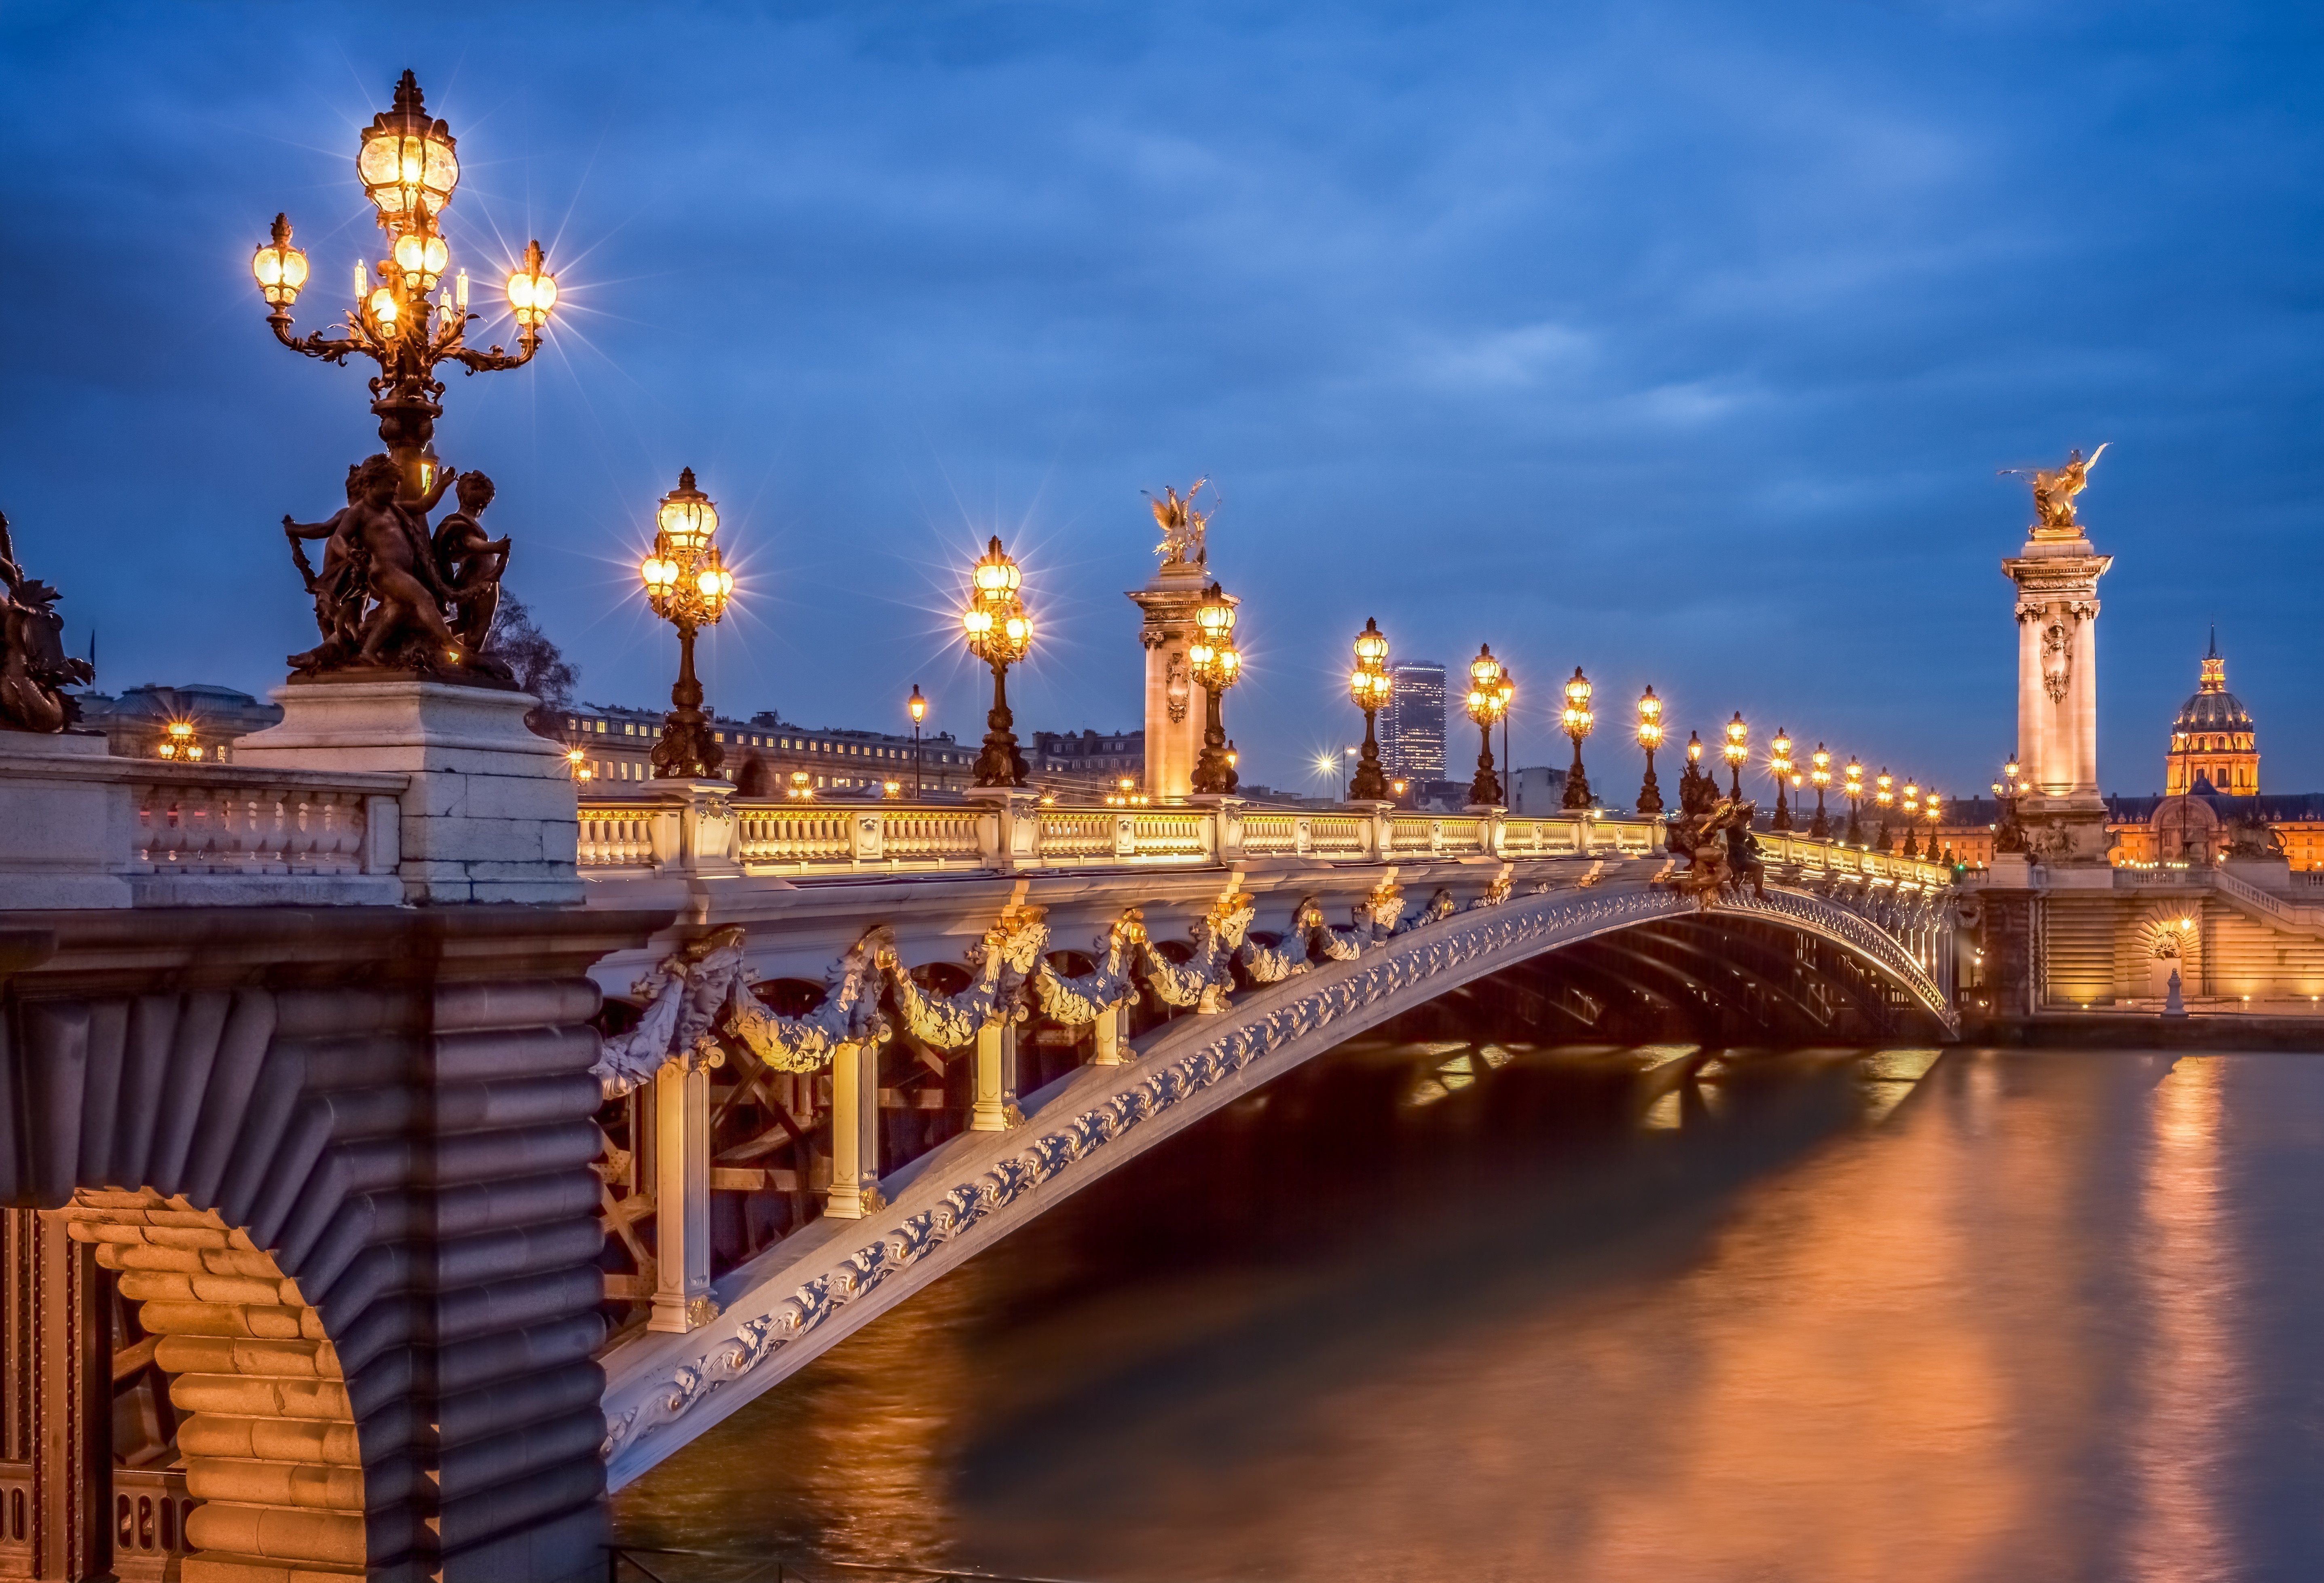 Pont Alexandre III in Paris - Bridges - Architecture - Categories ...